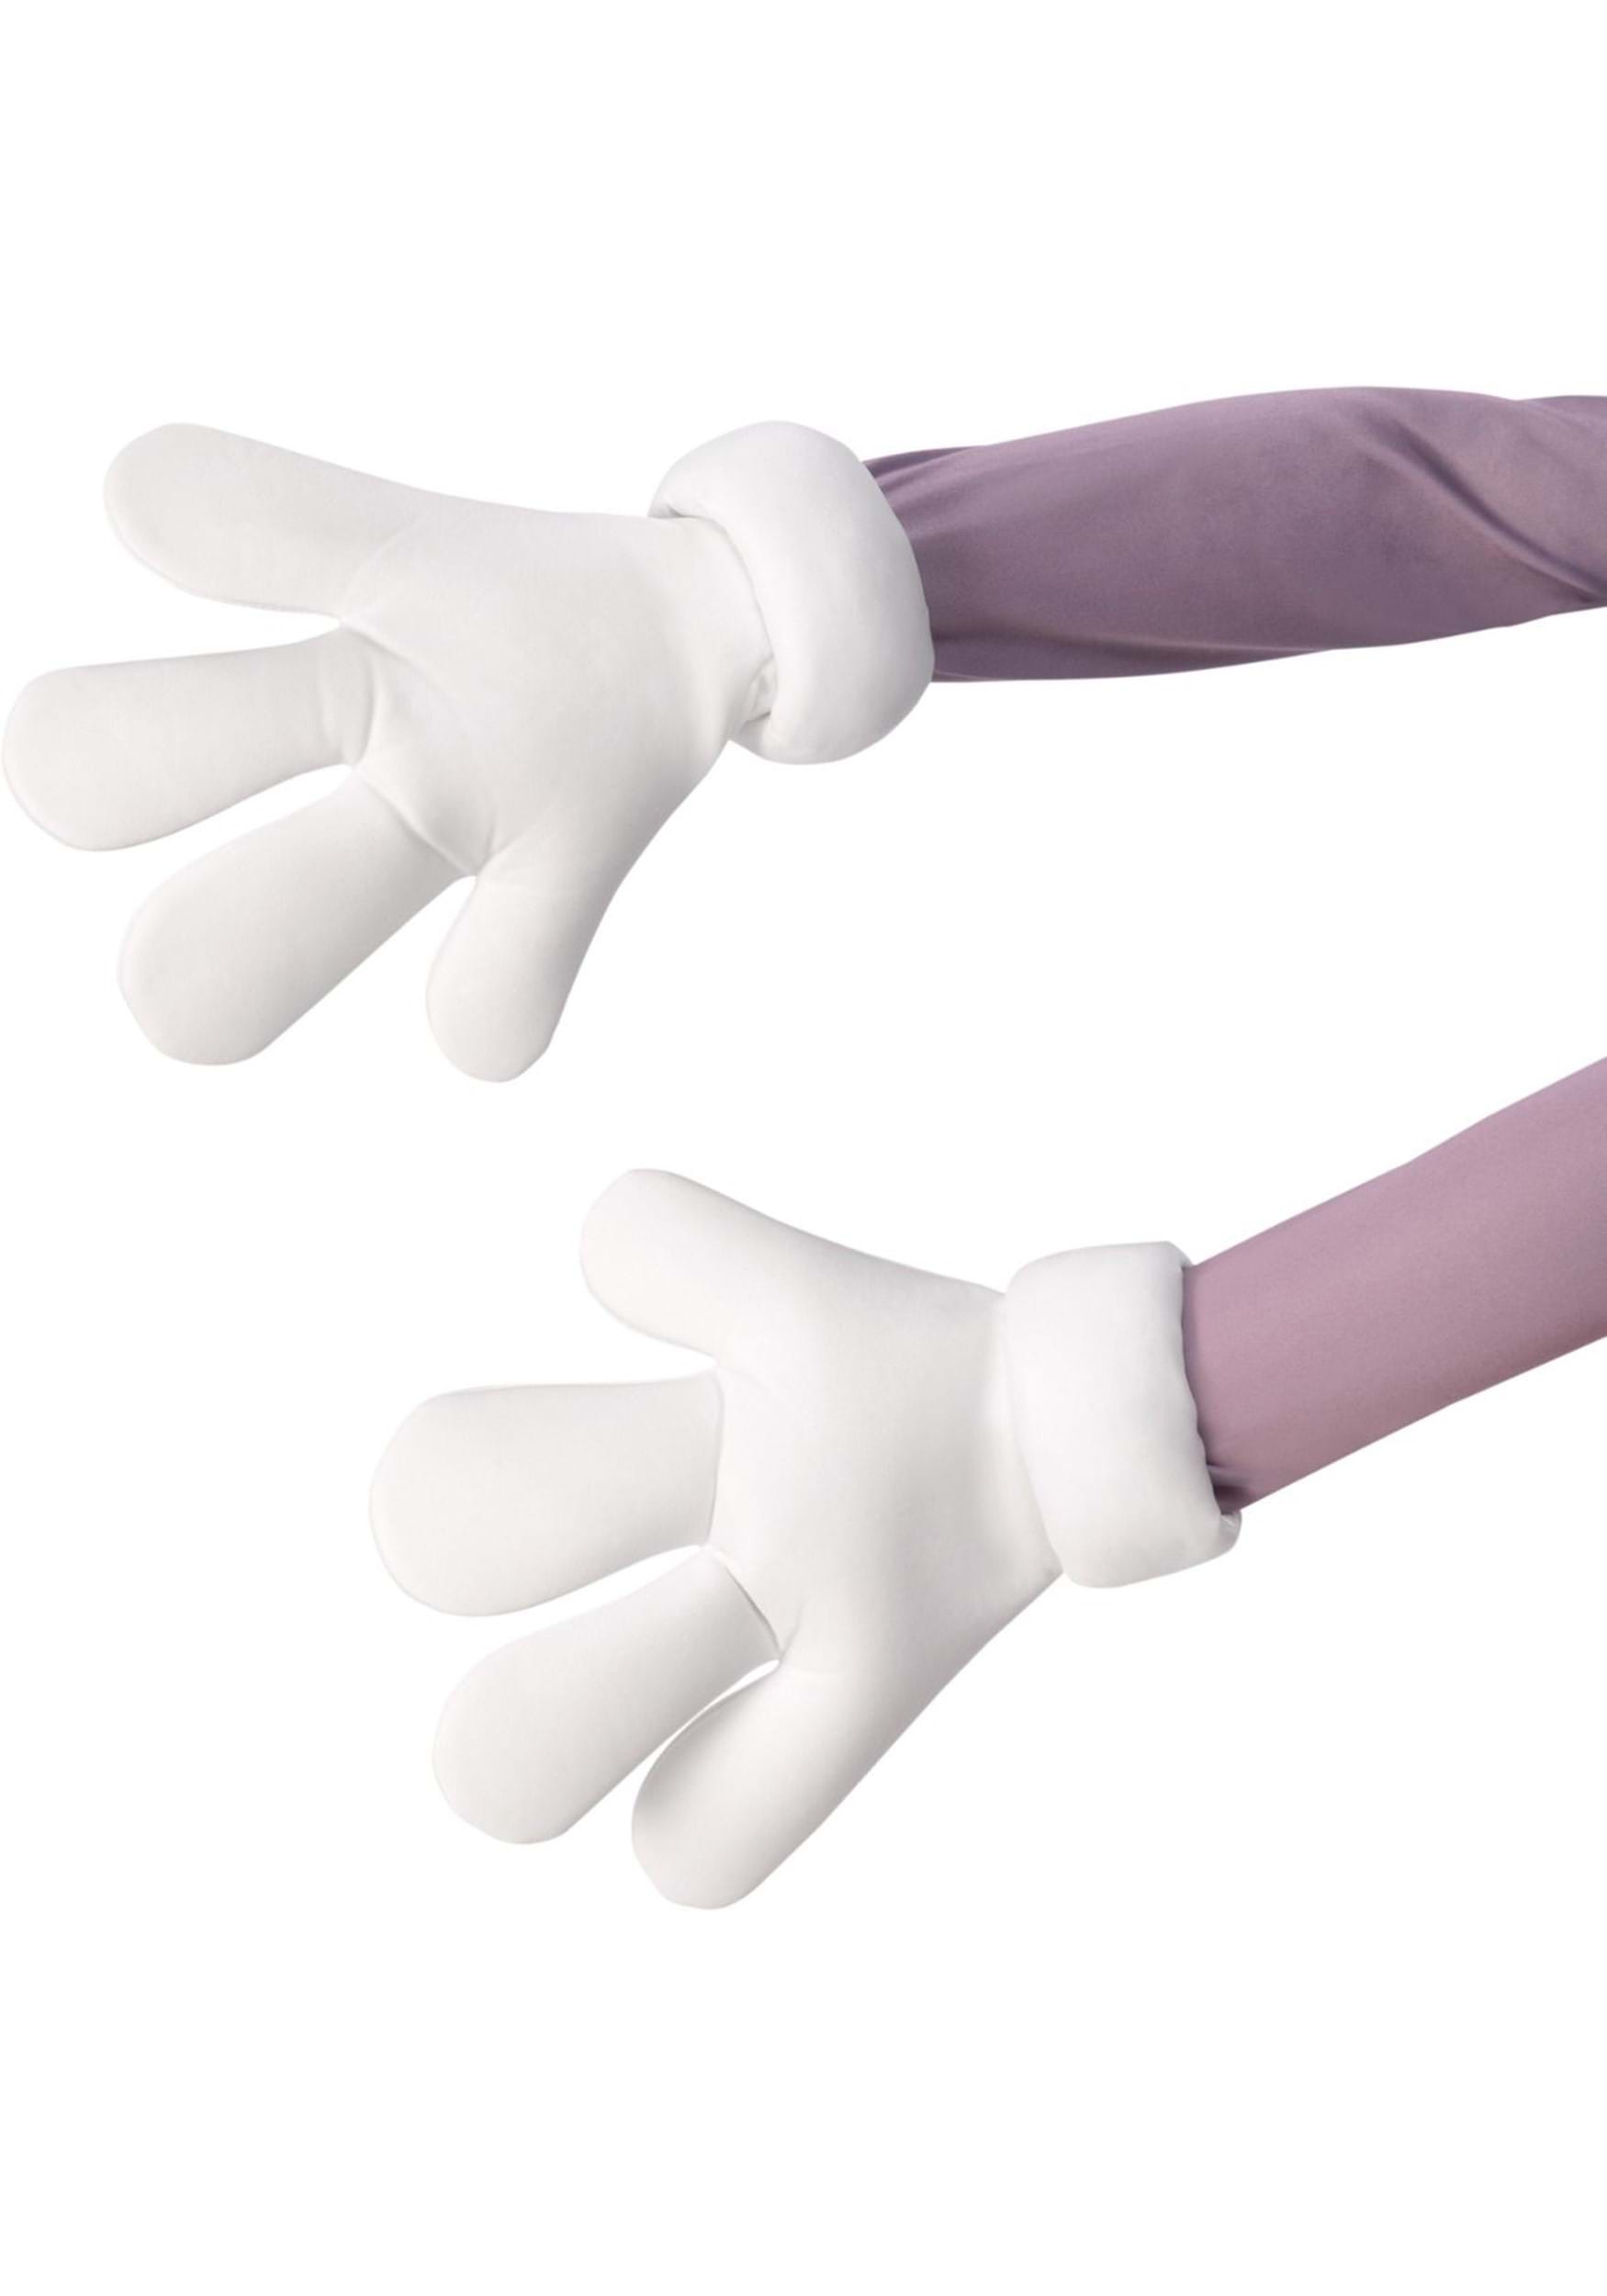 Space Jam 2 Bugs Bunny Kid’s Gloves